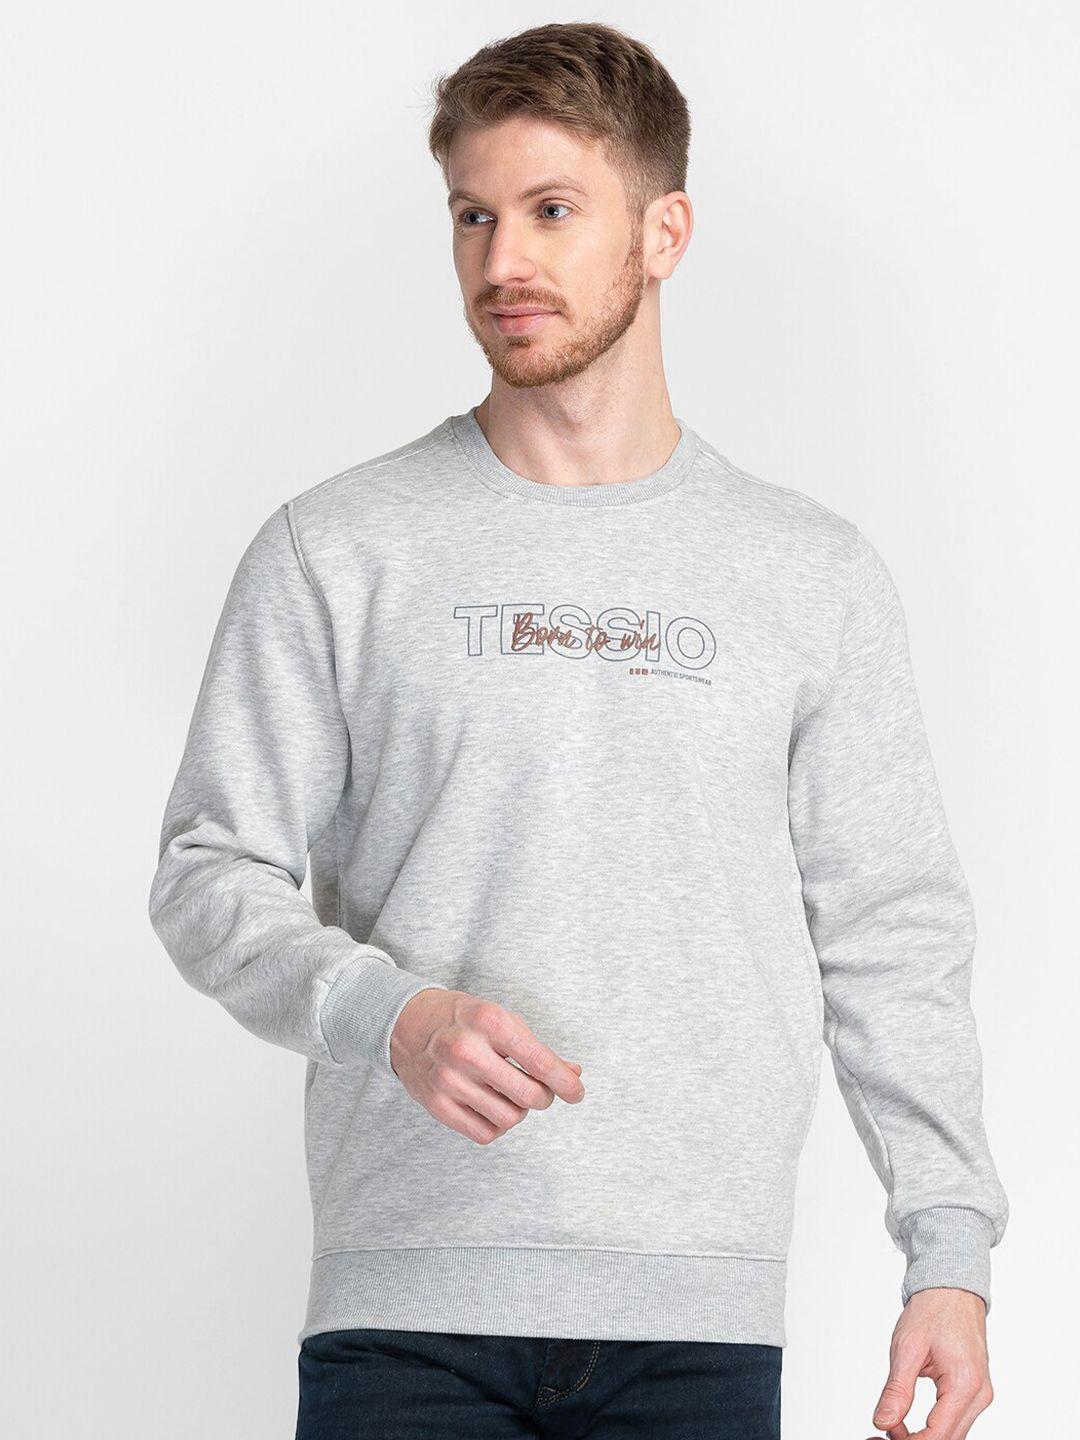 tessio men silver-toned sweatshirt